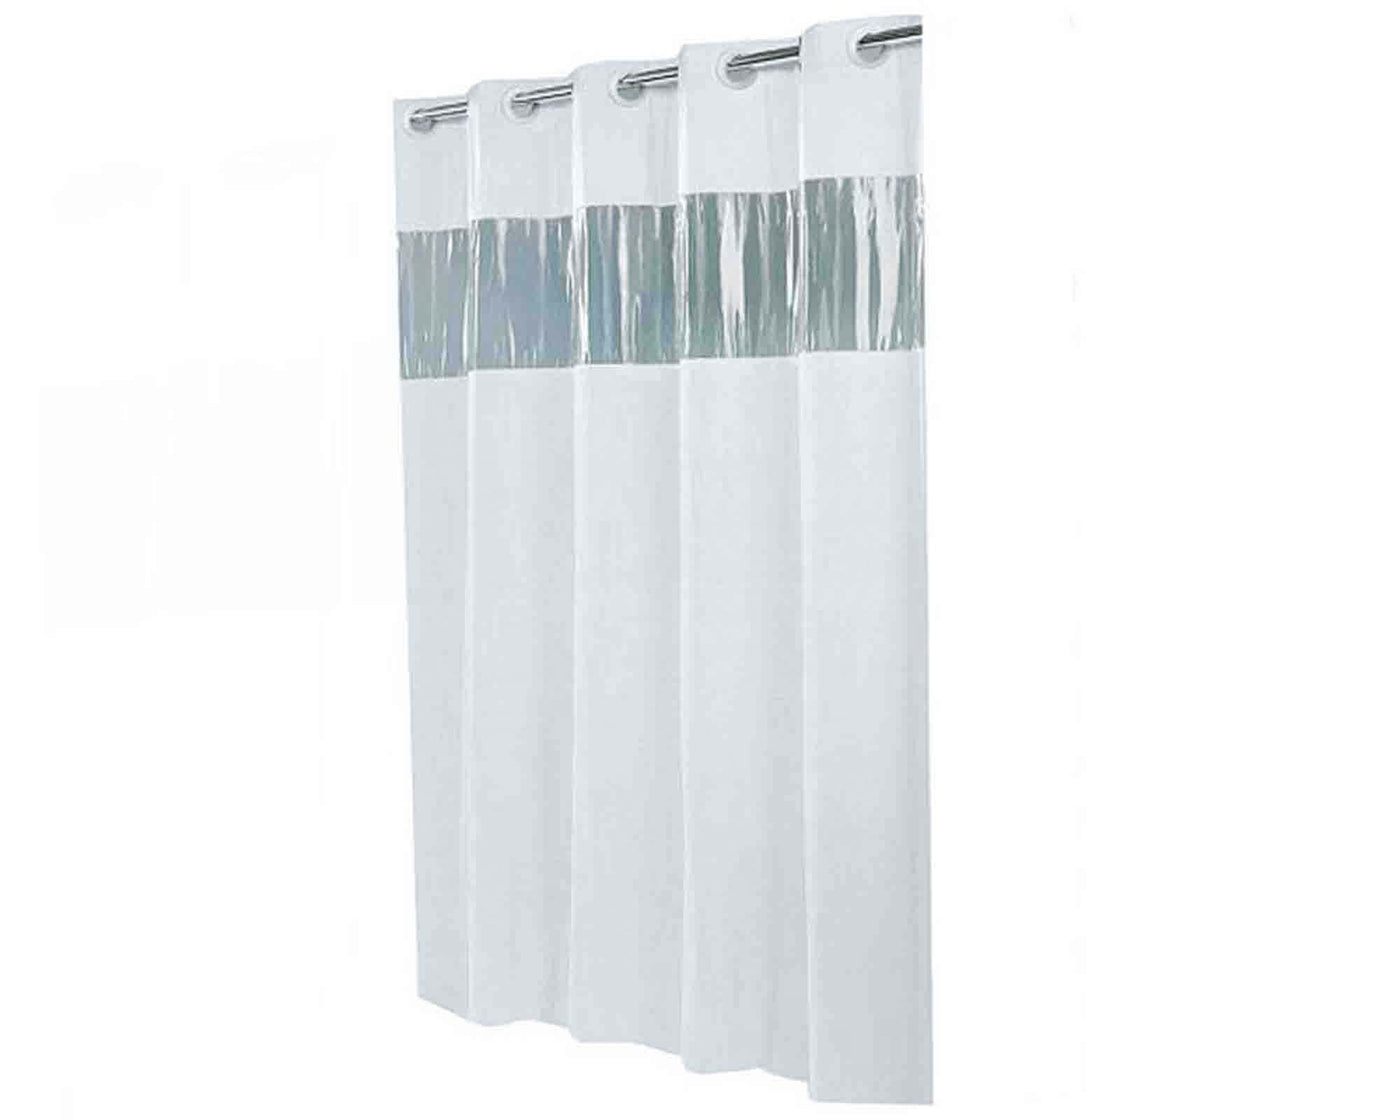 Polyester nylon shower curtain with vinyl window